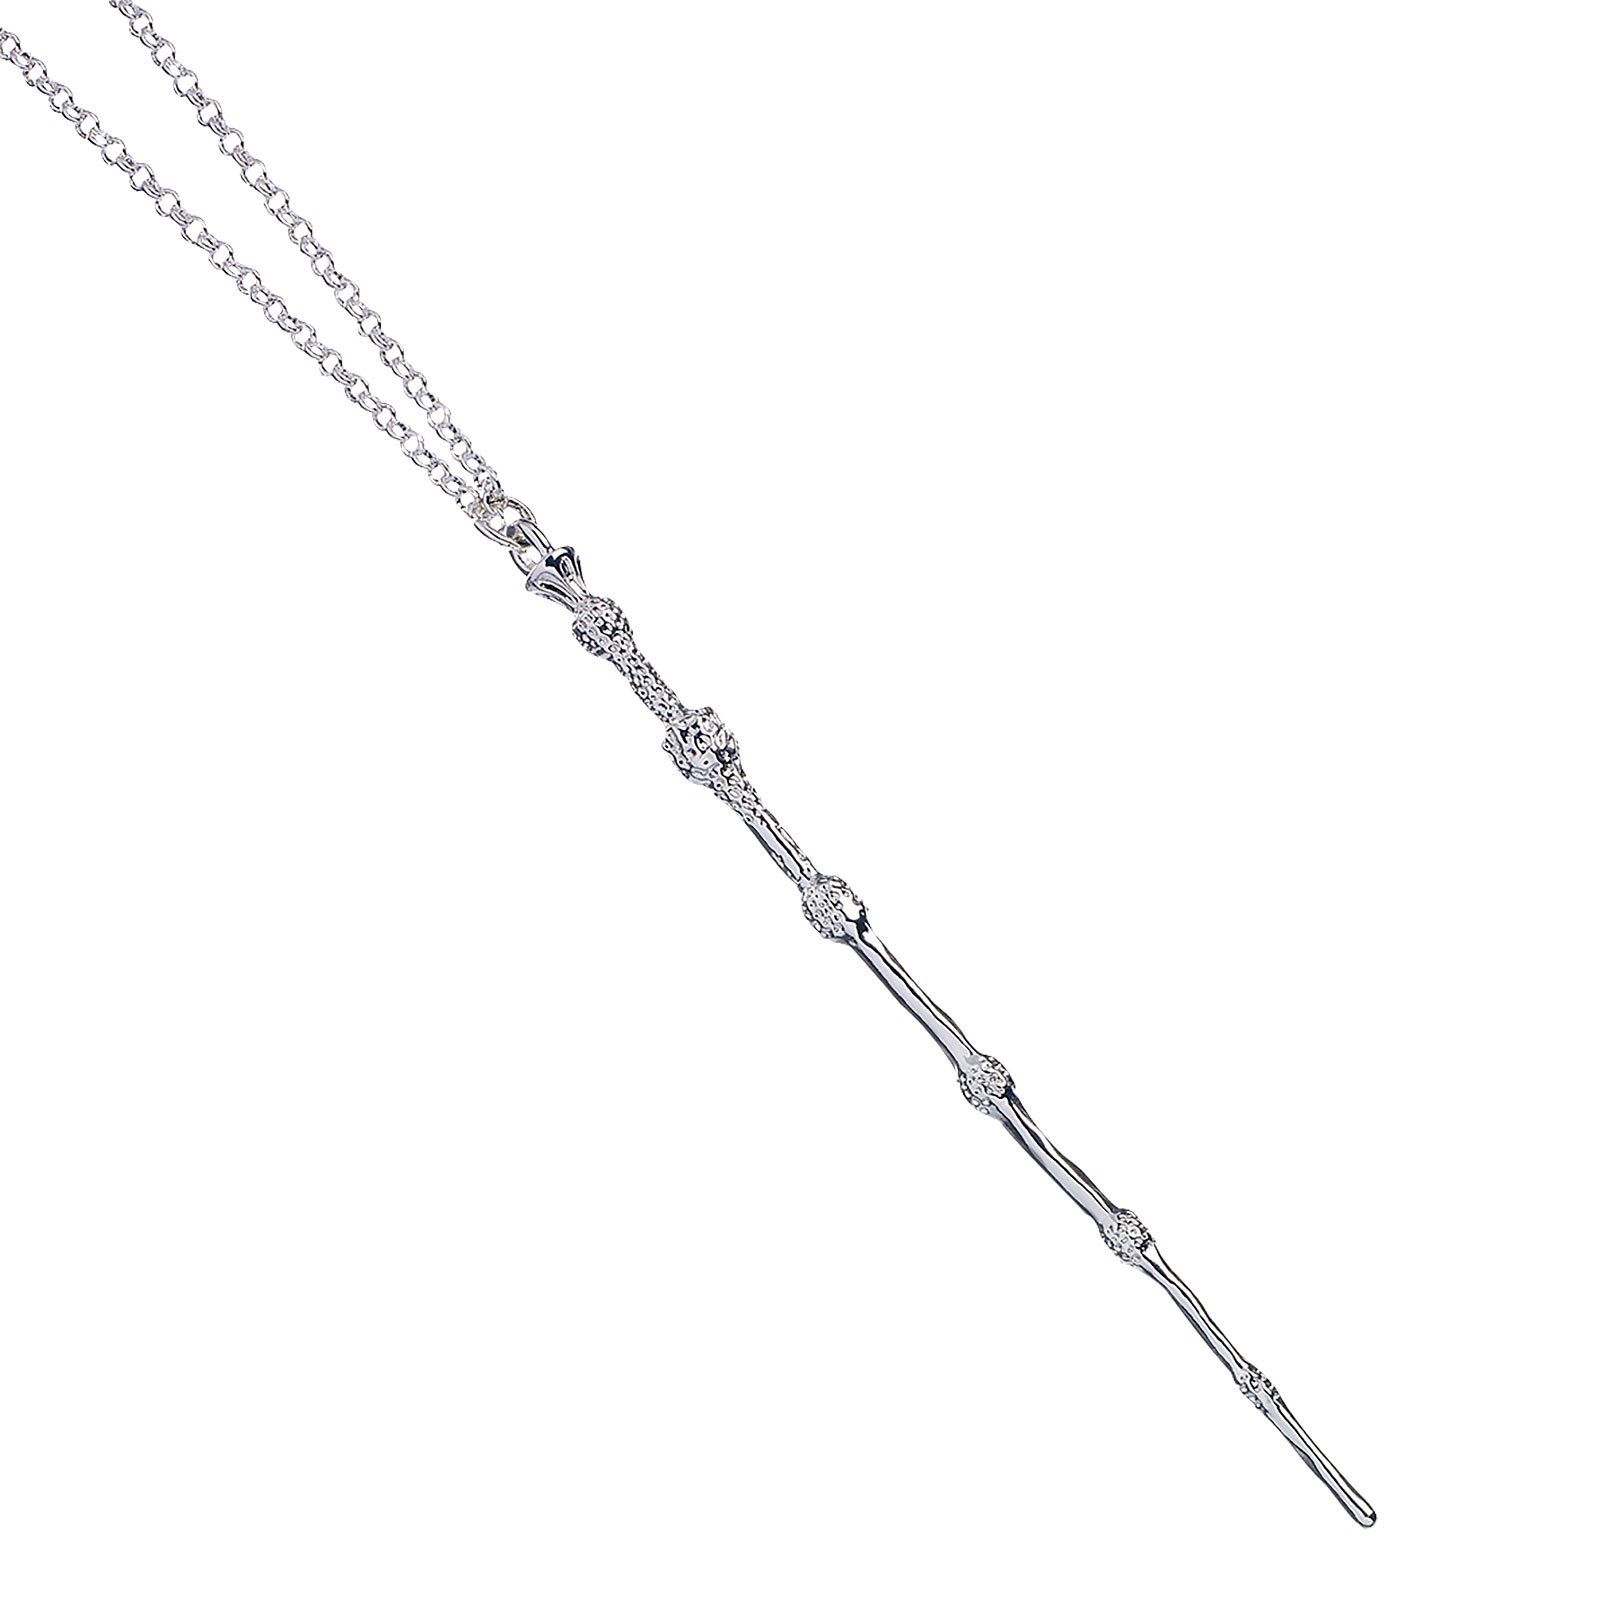 Harry Potter - Dumbledore Wand Necklace